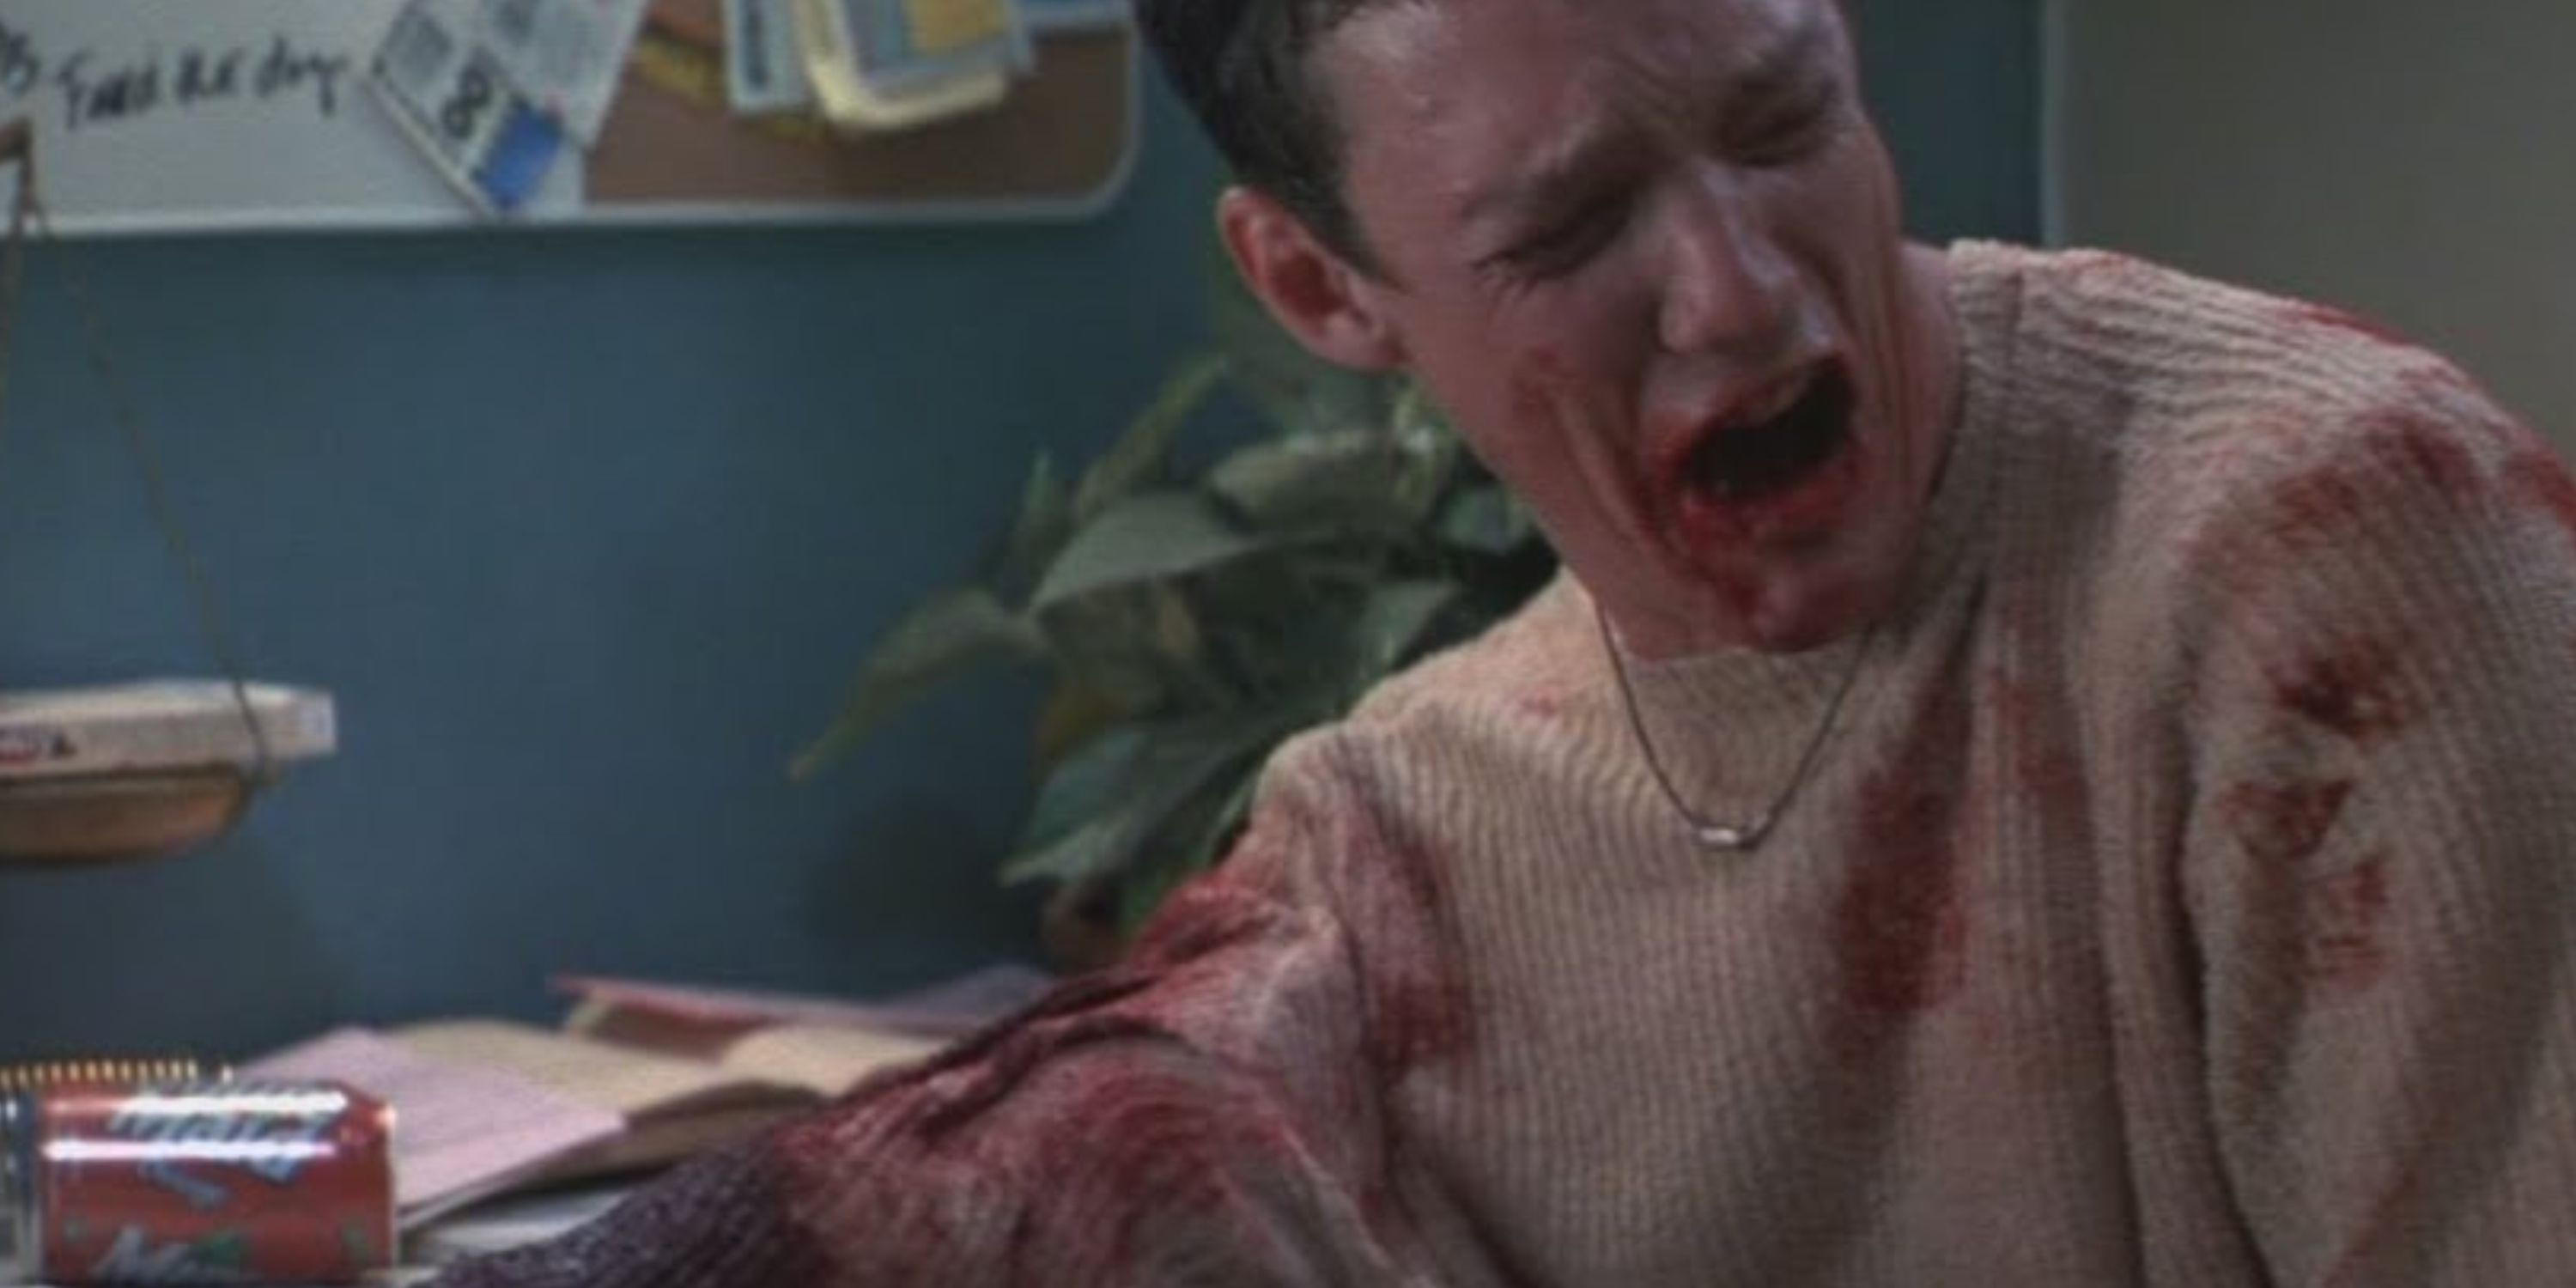 Stu yelling at Billy in Scream (1996)